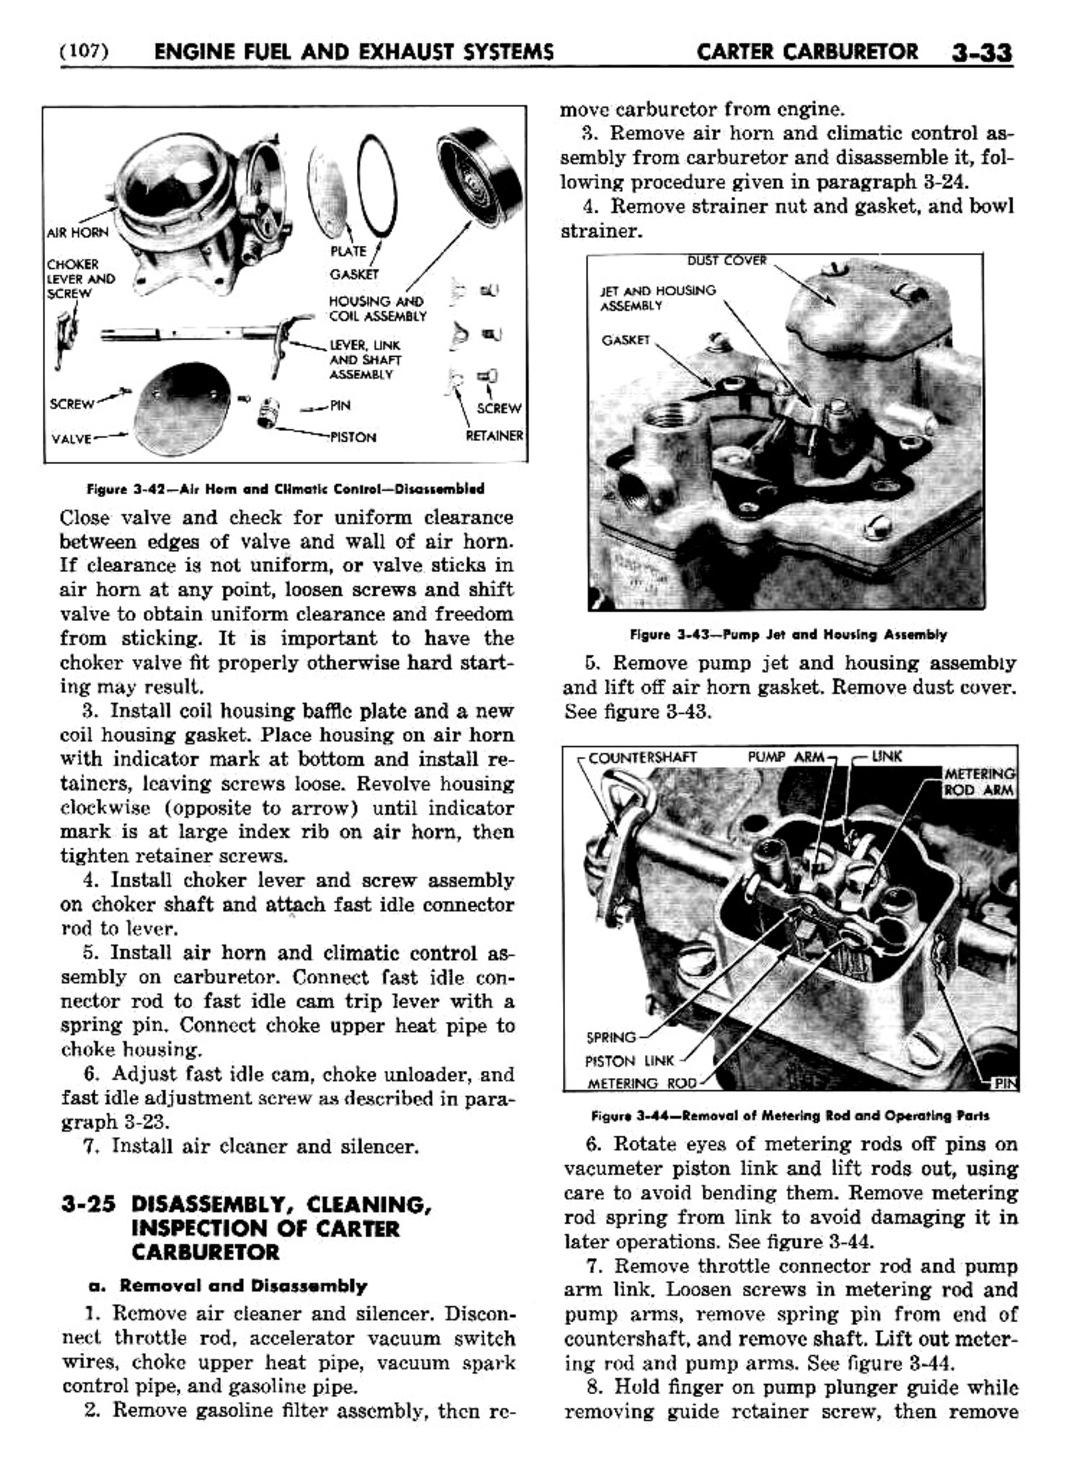 n_04 1948 Buick Shop Manual - Engine Fuel & Exhaust-033-033.jpg